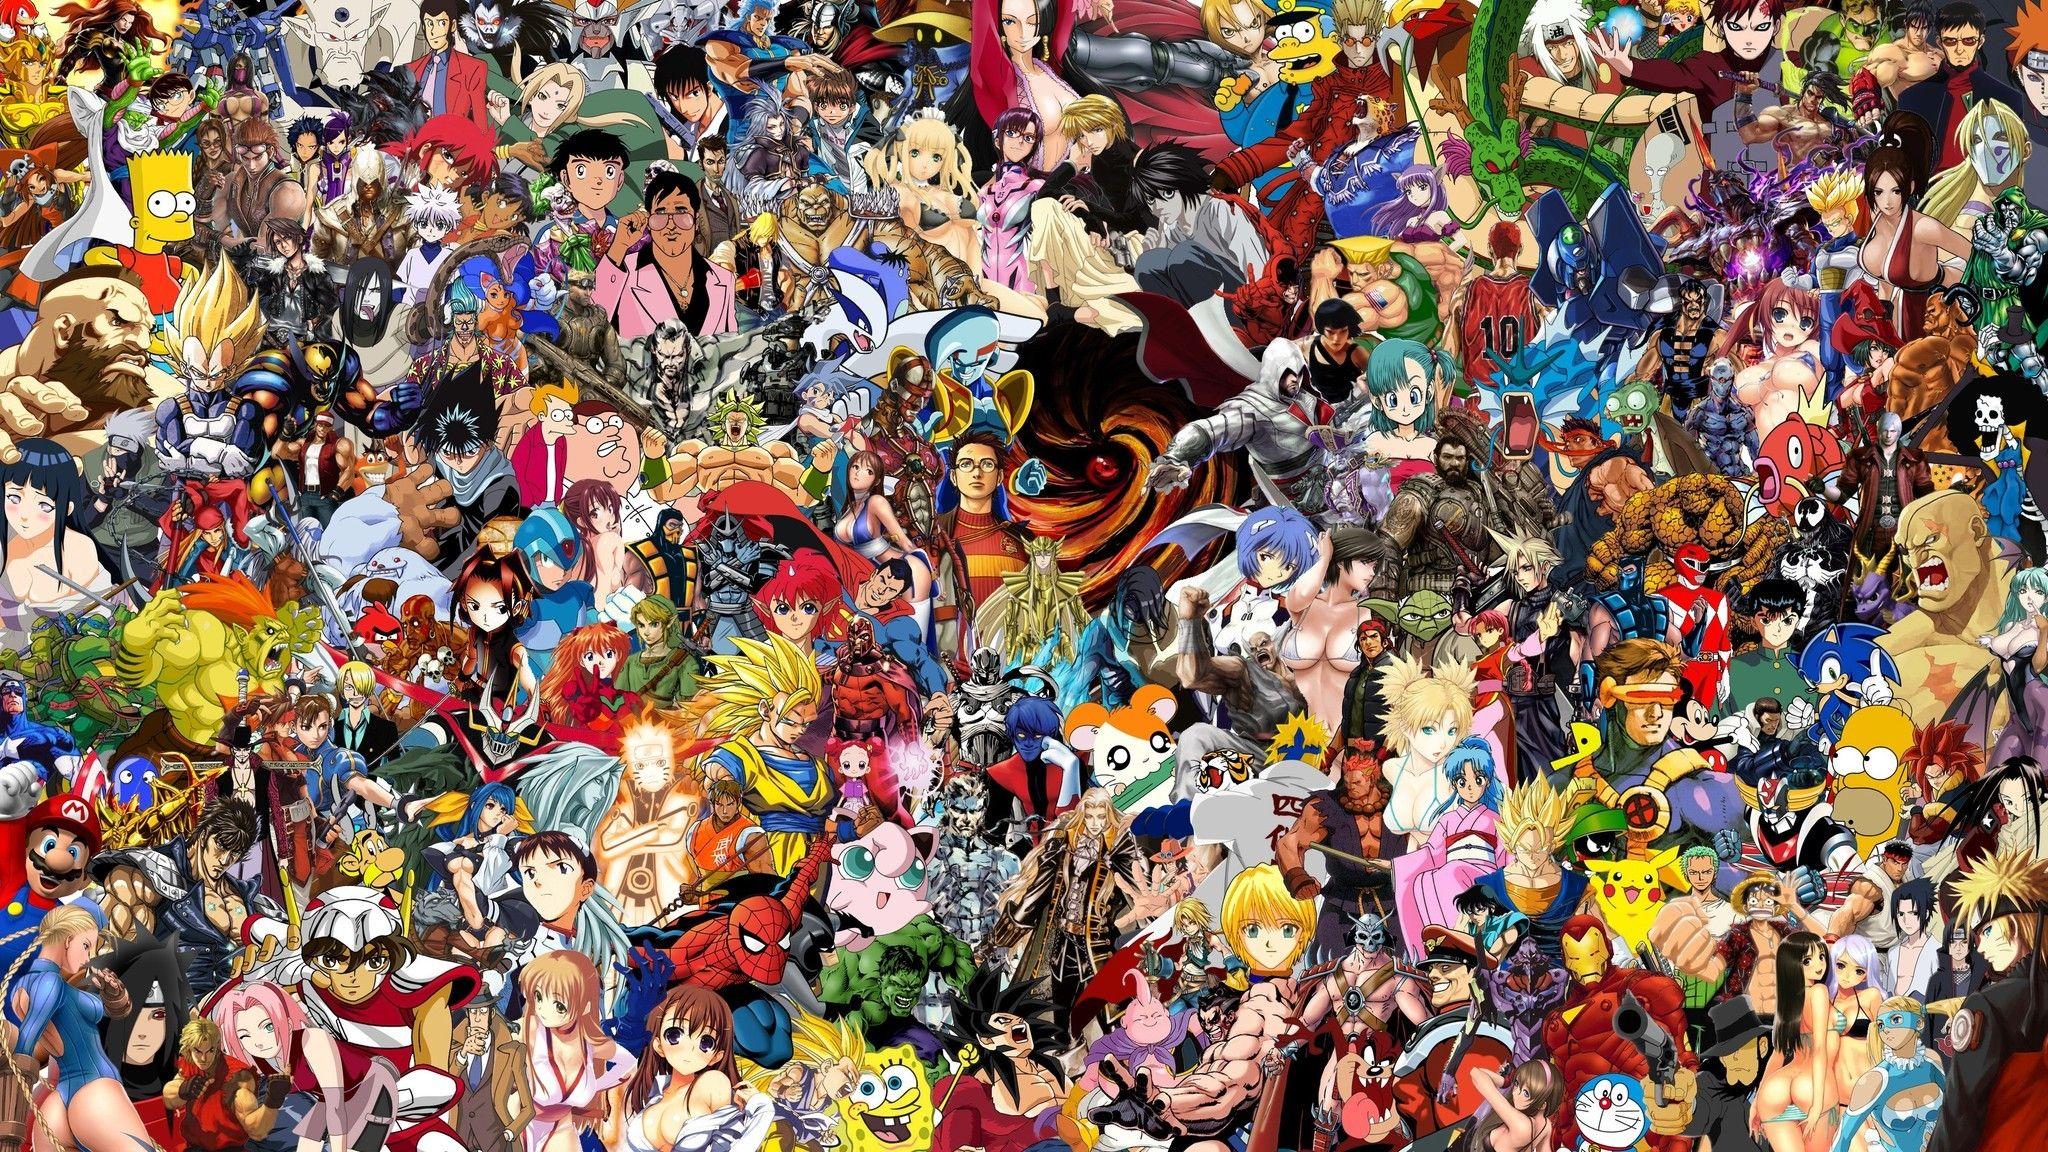 Insane Anime Cartoon Video Game Montage Wallpaper. Retro games wallpaper, Anime wallpaper, Character wallpaper